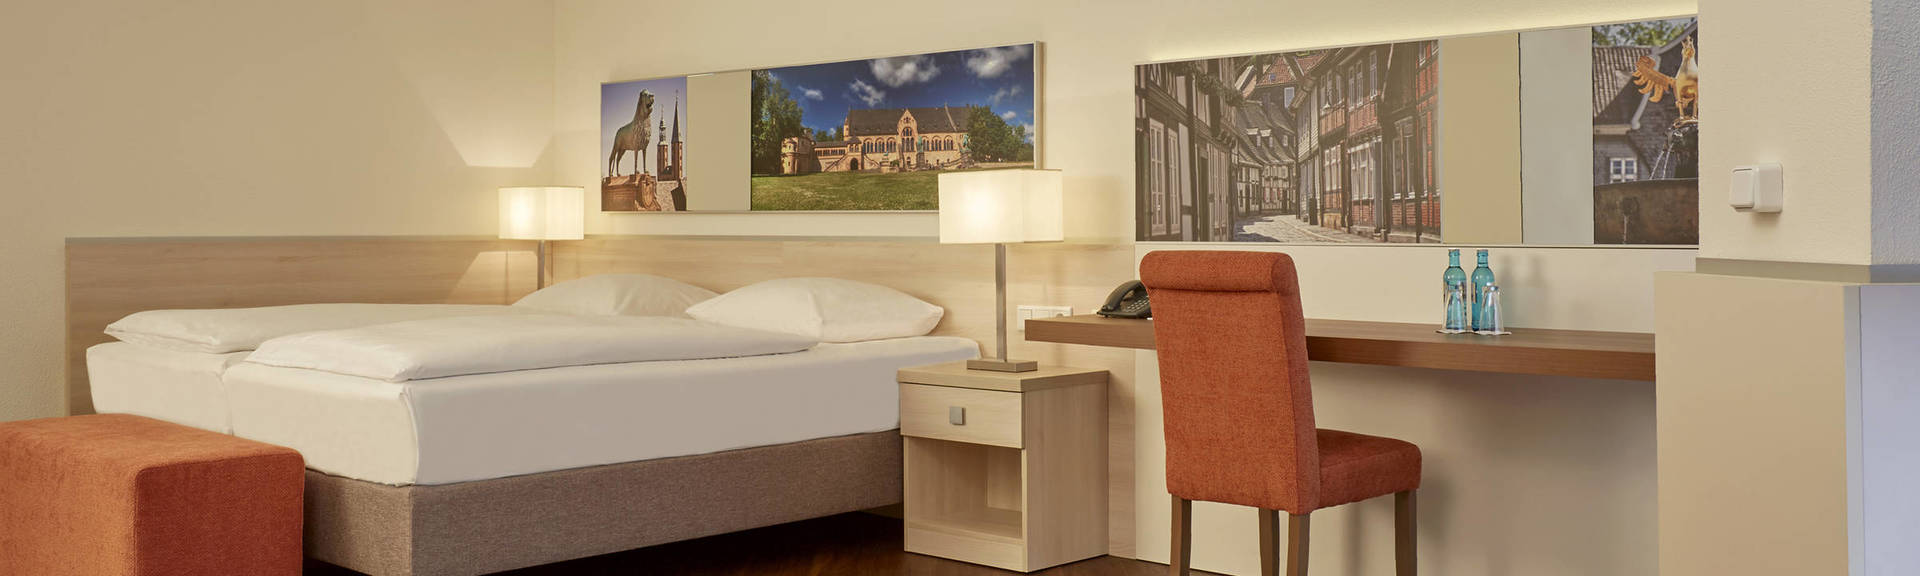 Hotelbeoordeling: H+ Hotel Goslar